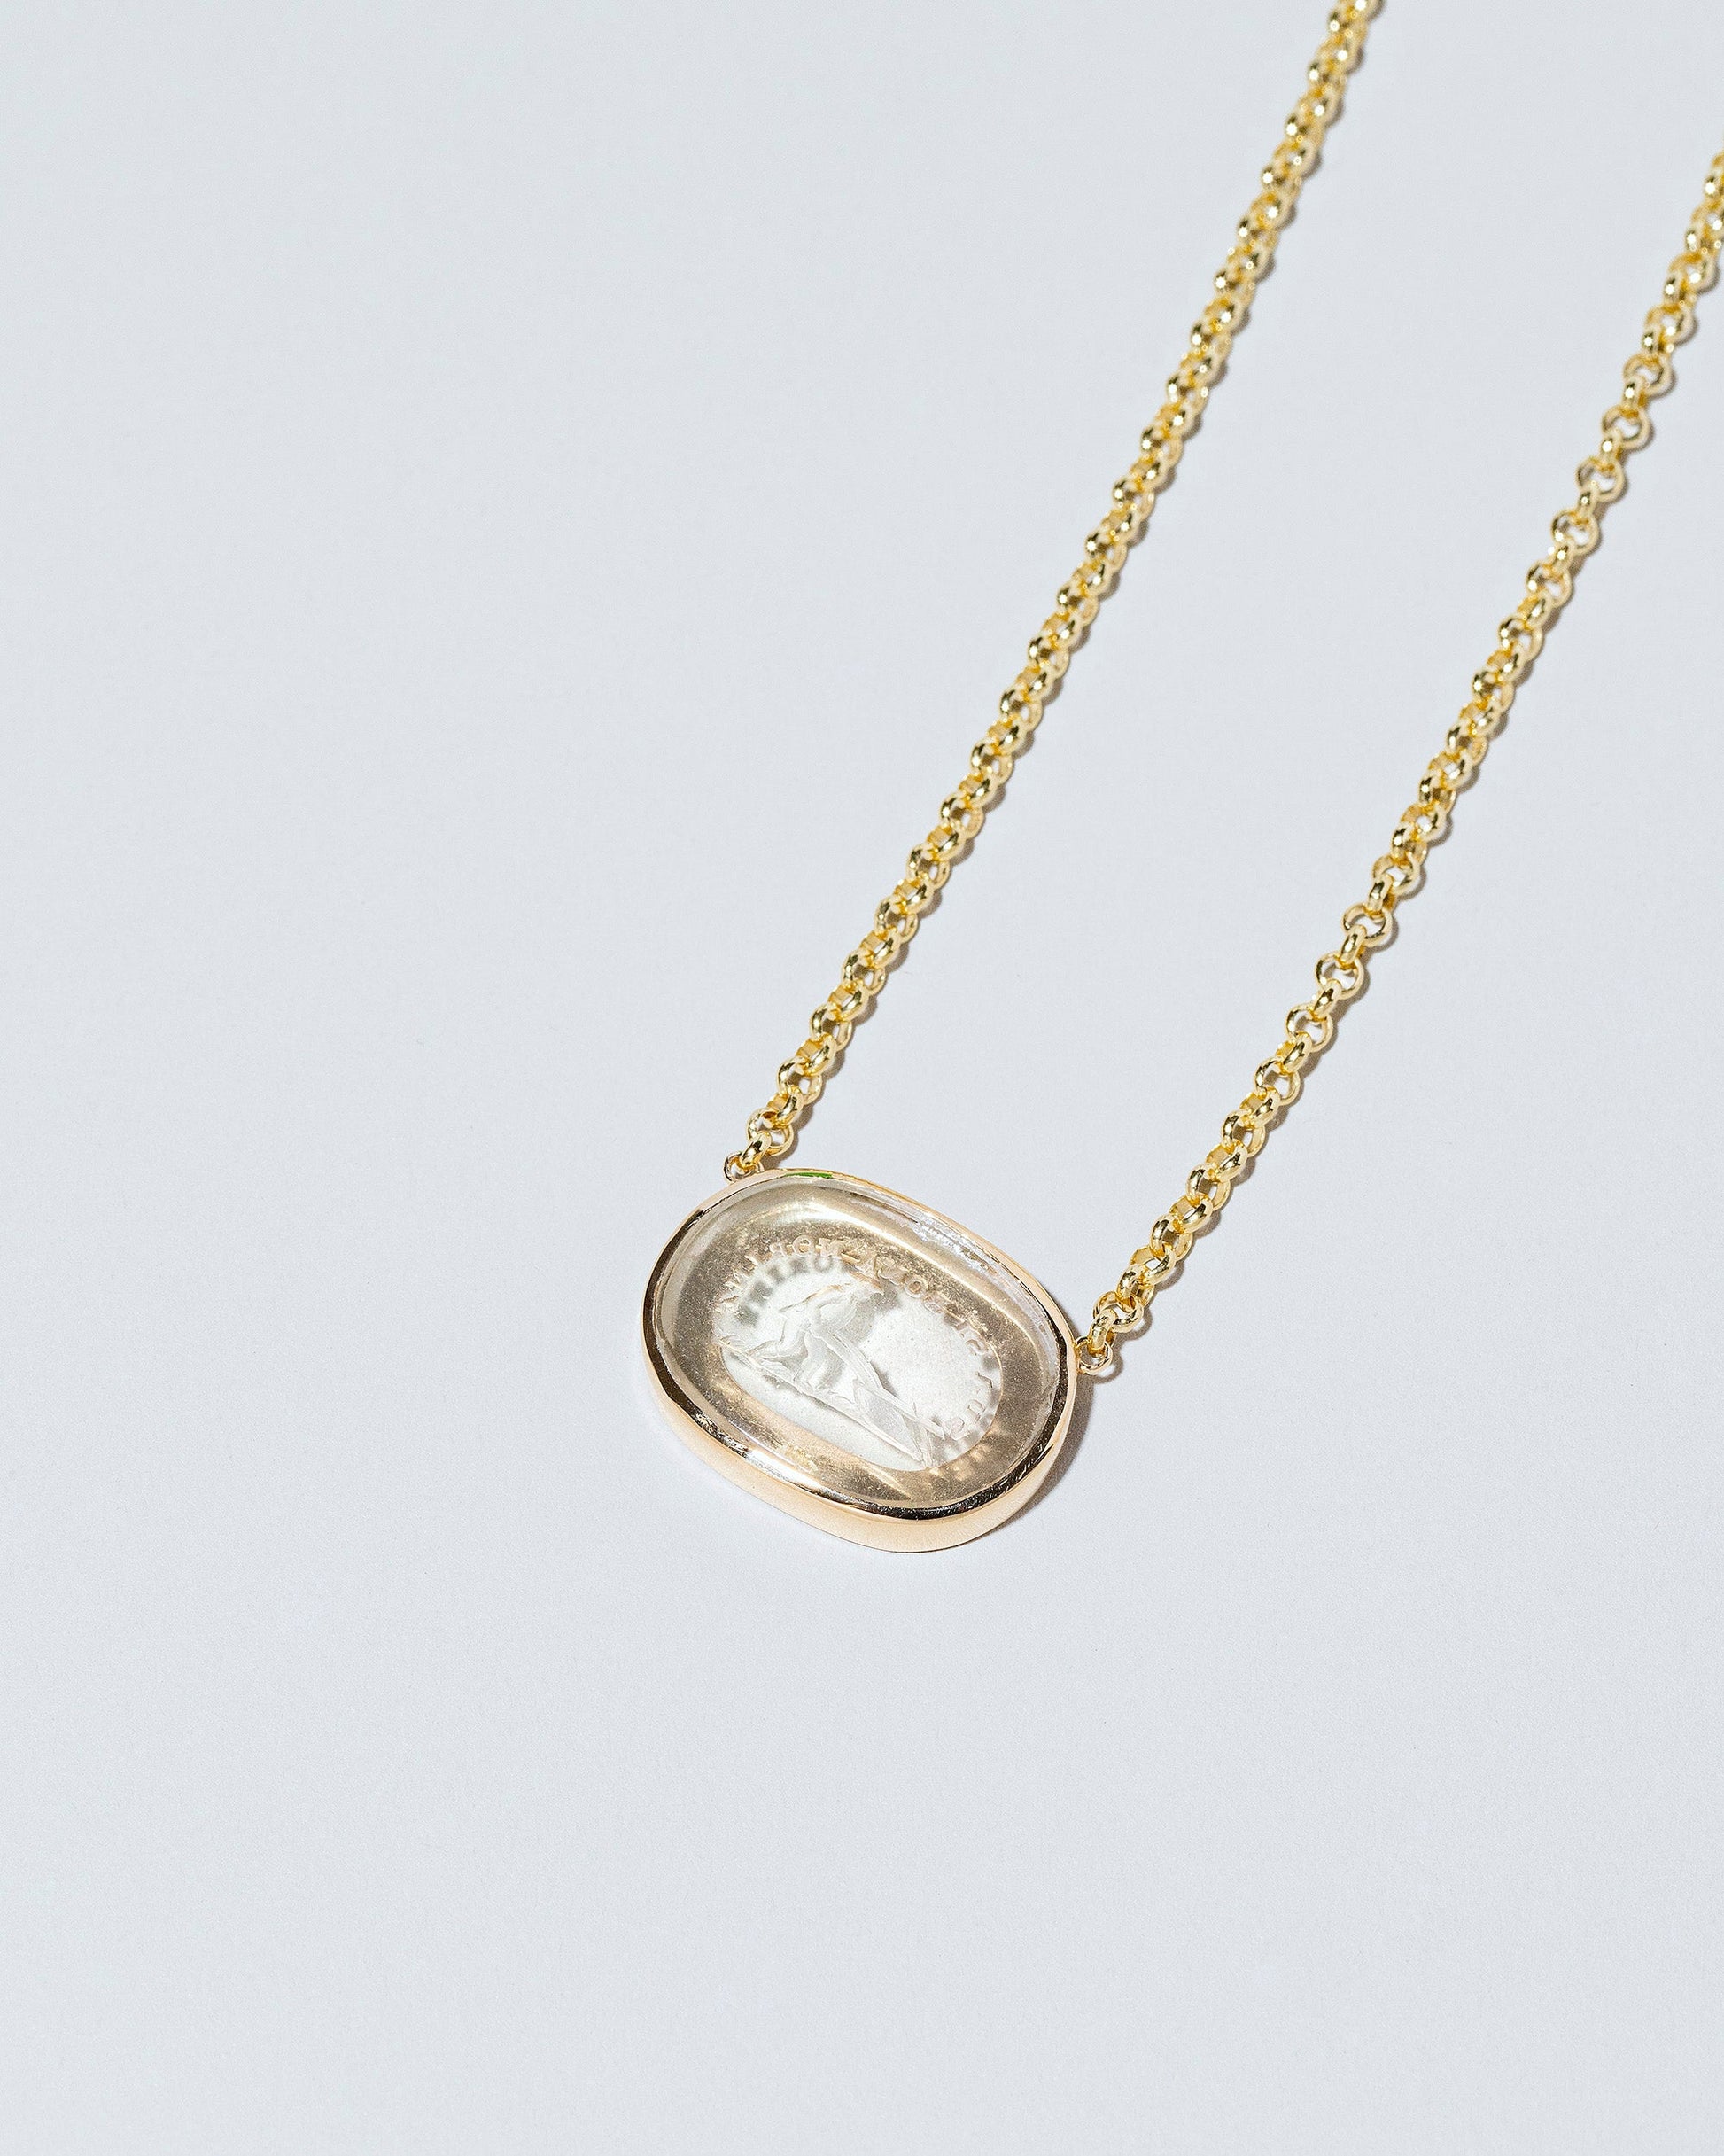  Simplicity Intaglio Seal Necklace on light color background.